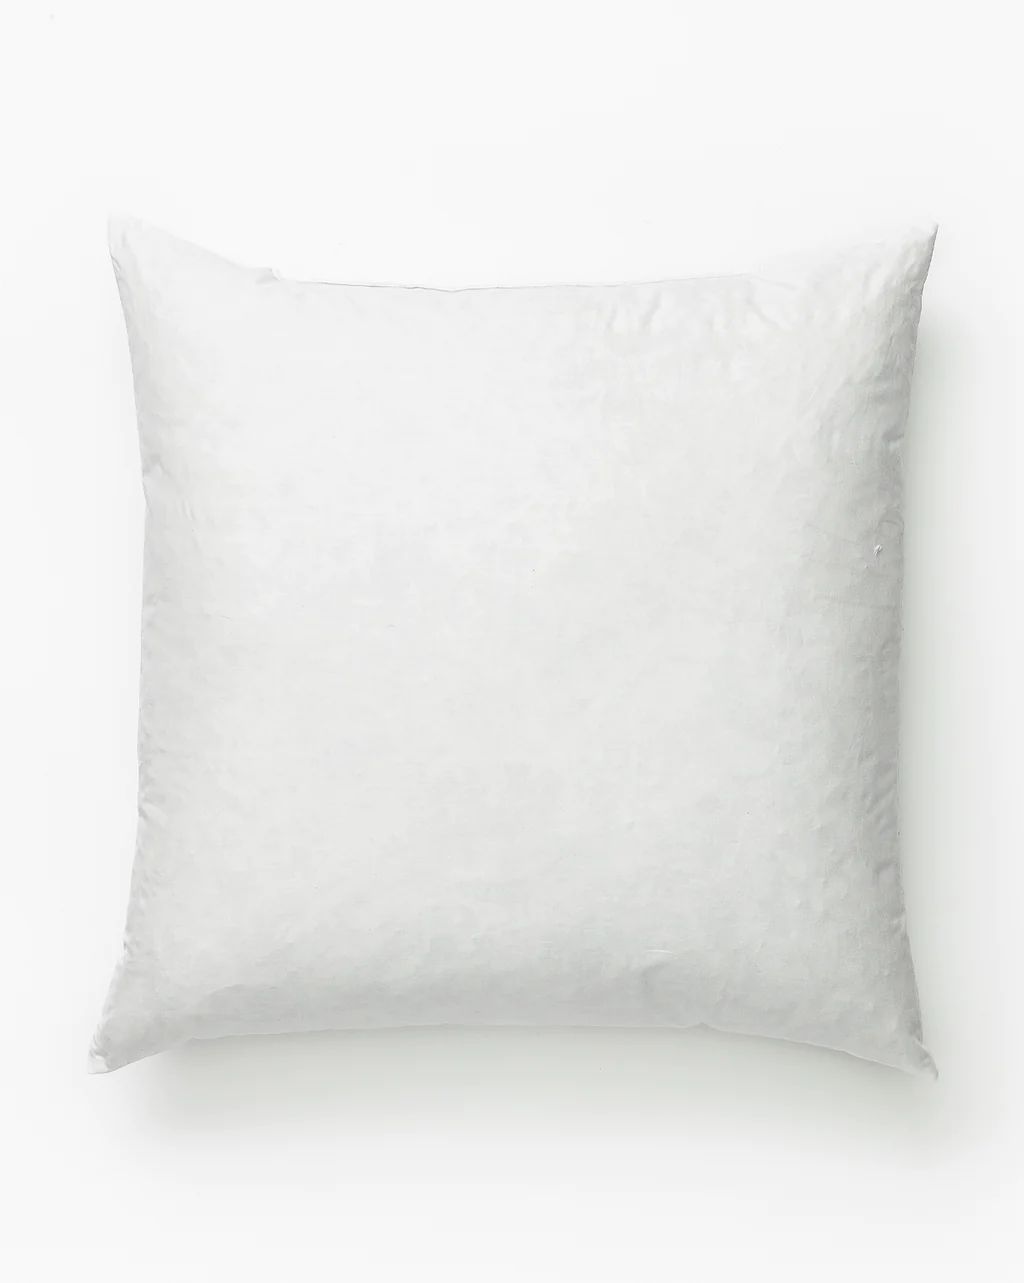 Premium Pillow Insert | McGee & Co.